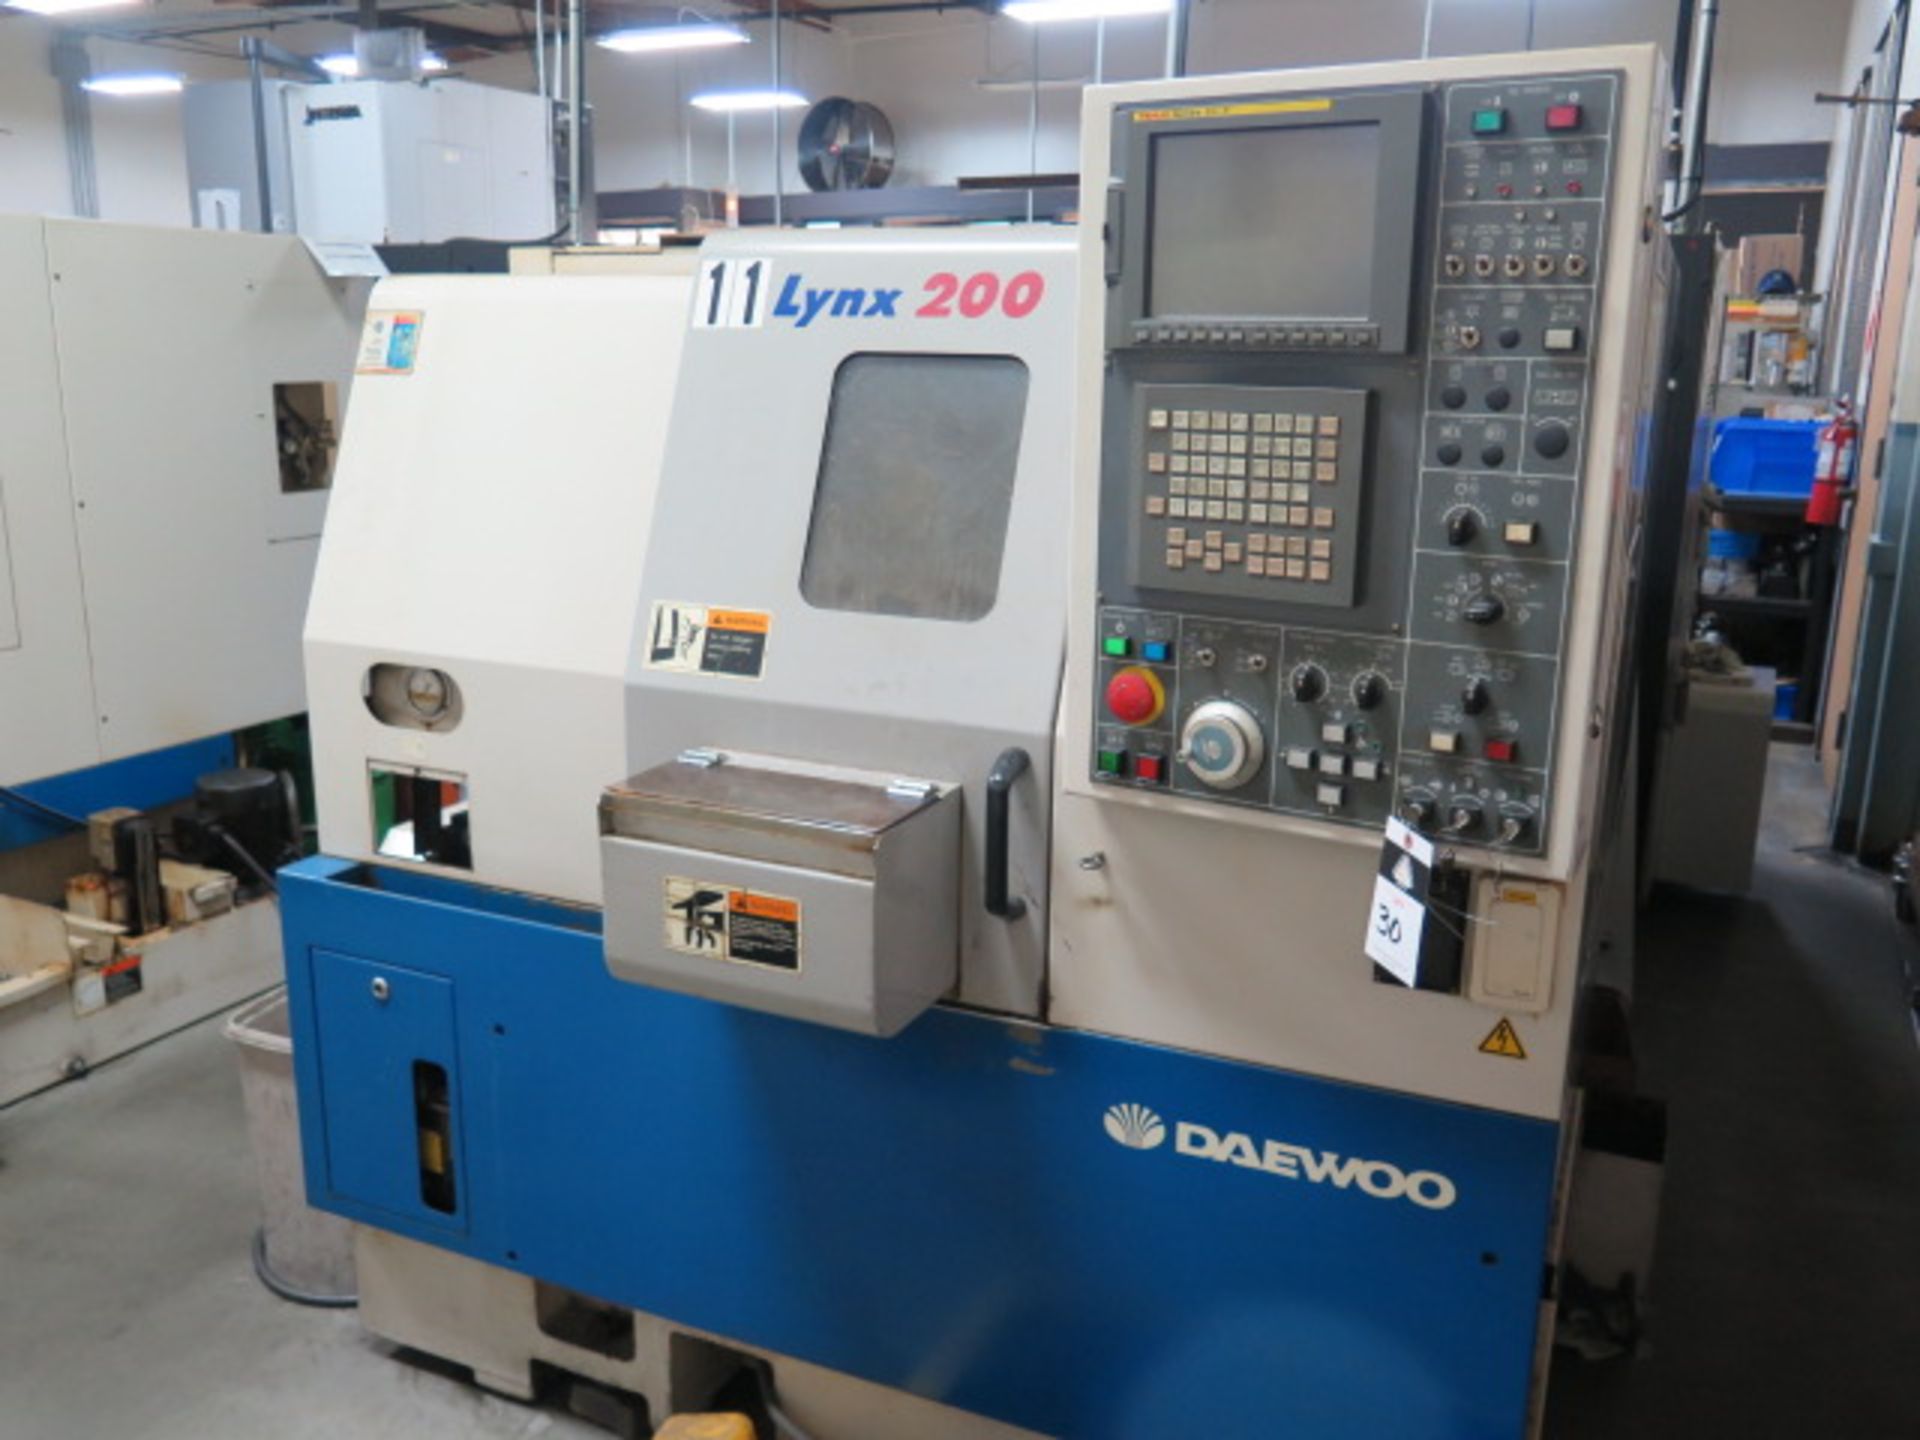 2000 Daewoo LYNX 200B CNC Turning Center s/n L2001751 w/ Fanuc Series 21i-T Controls, SOLD AS IS